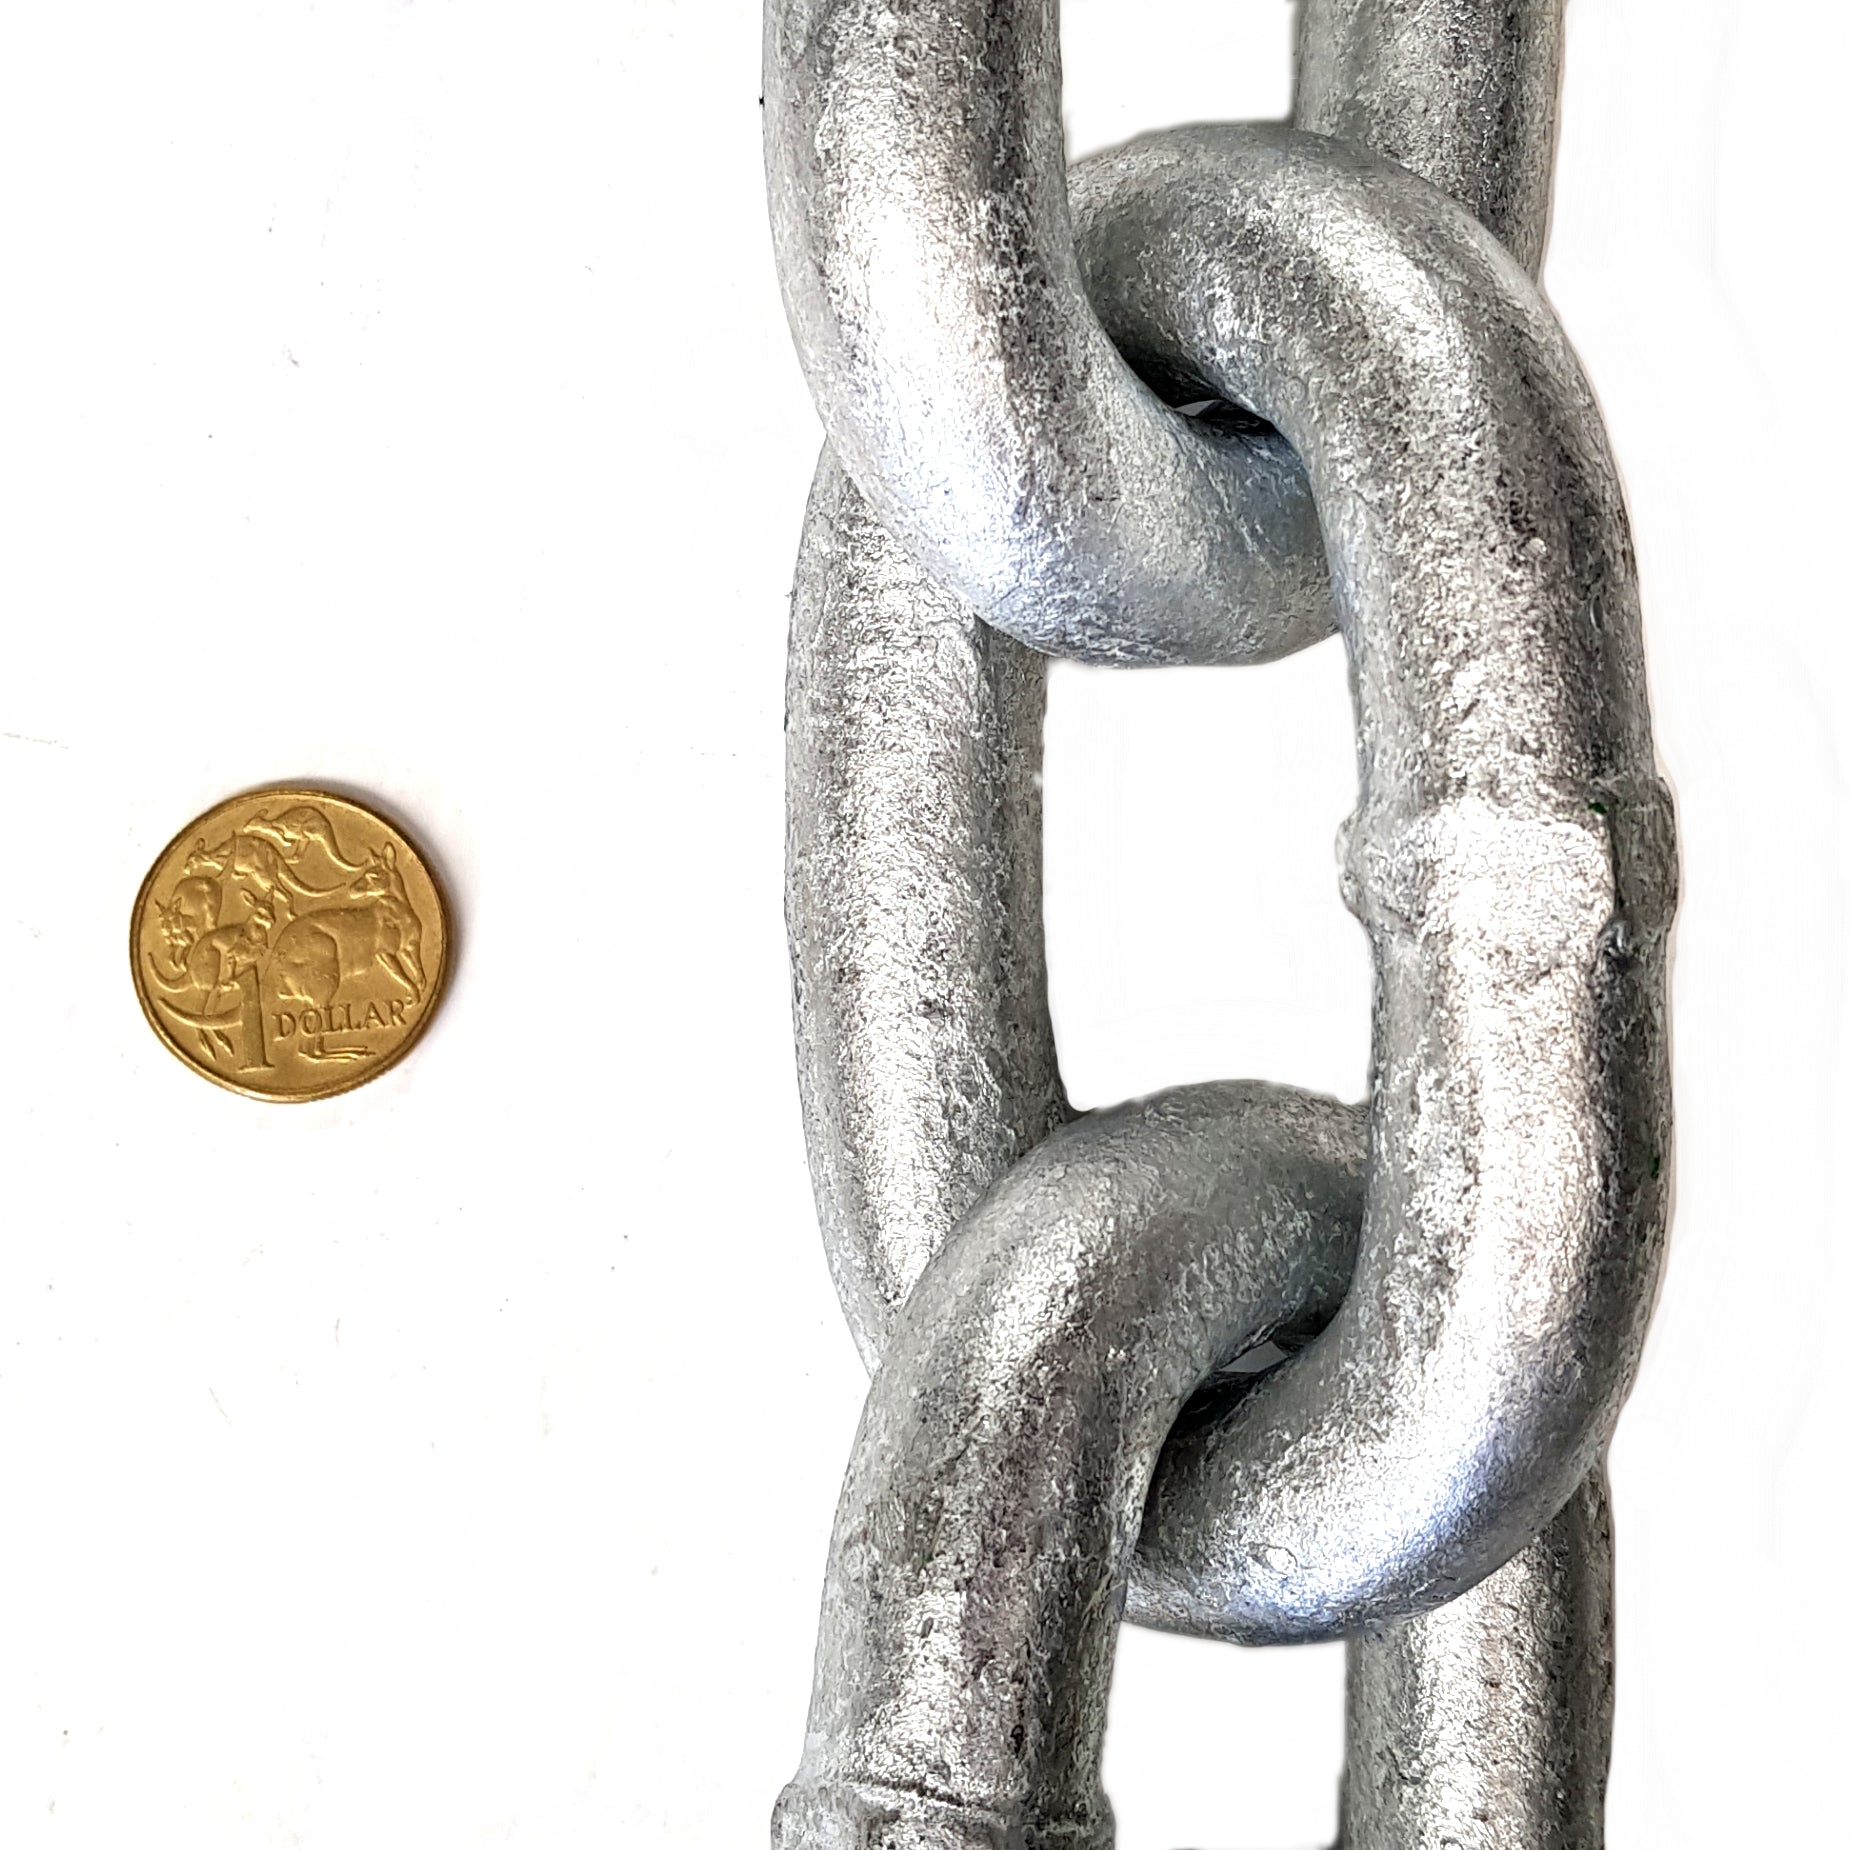 5mm galvanised welded link steel chain in a 25kg bucket. 3 metres of chain.